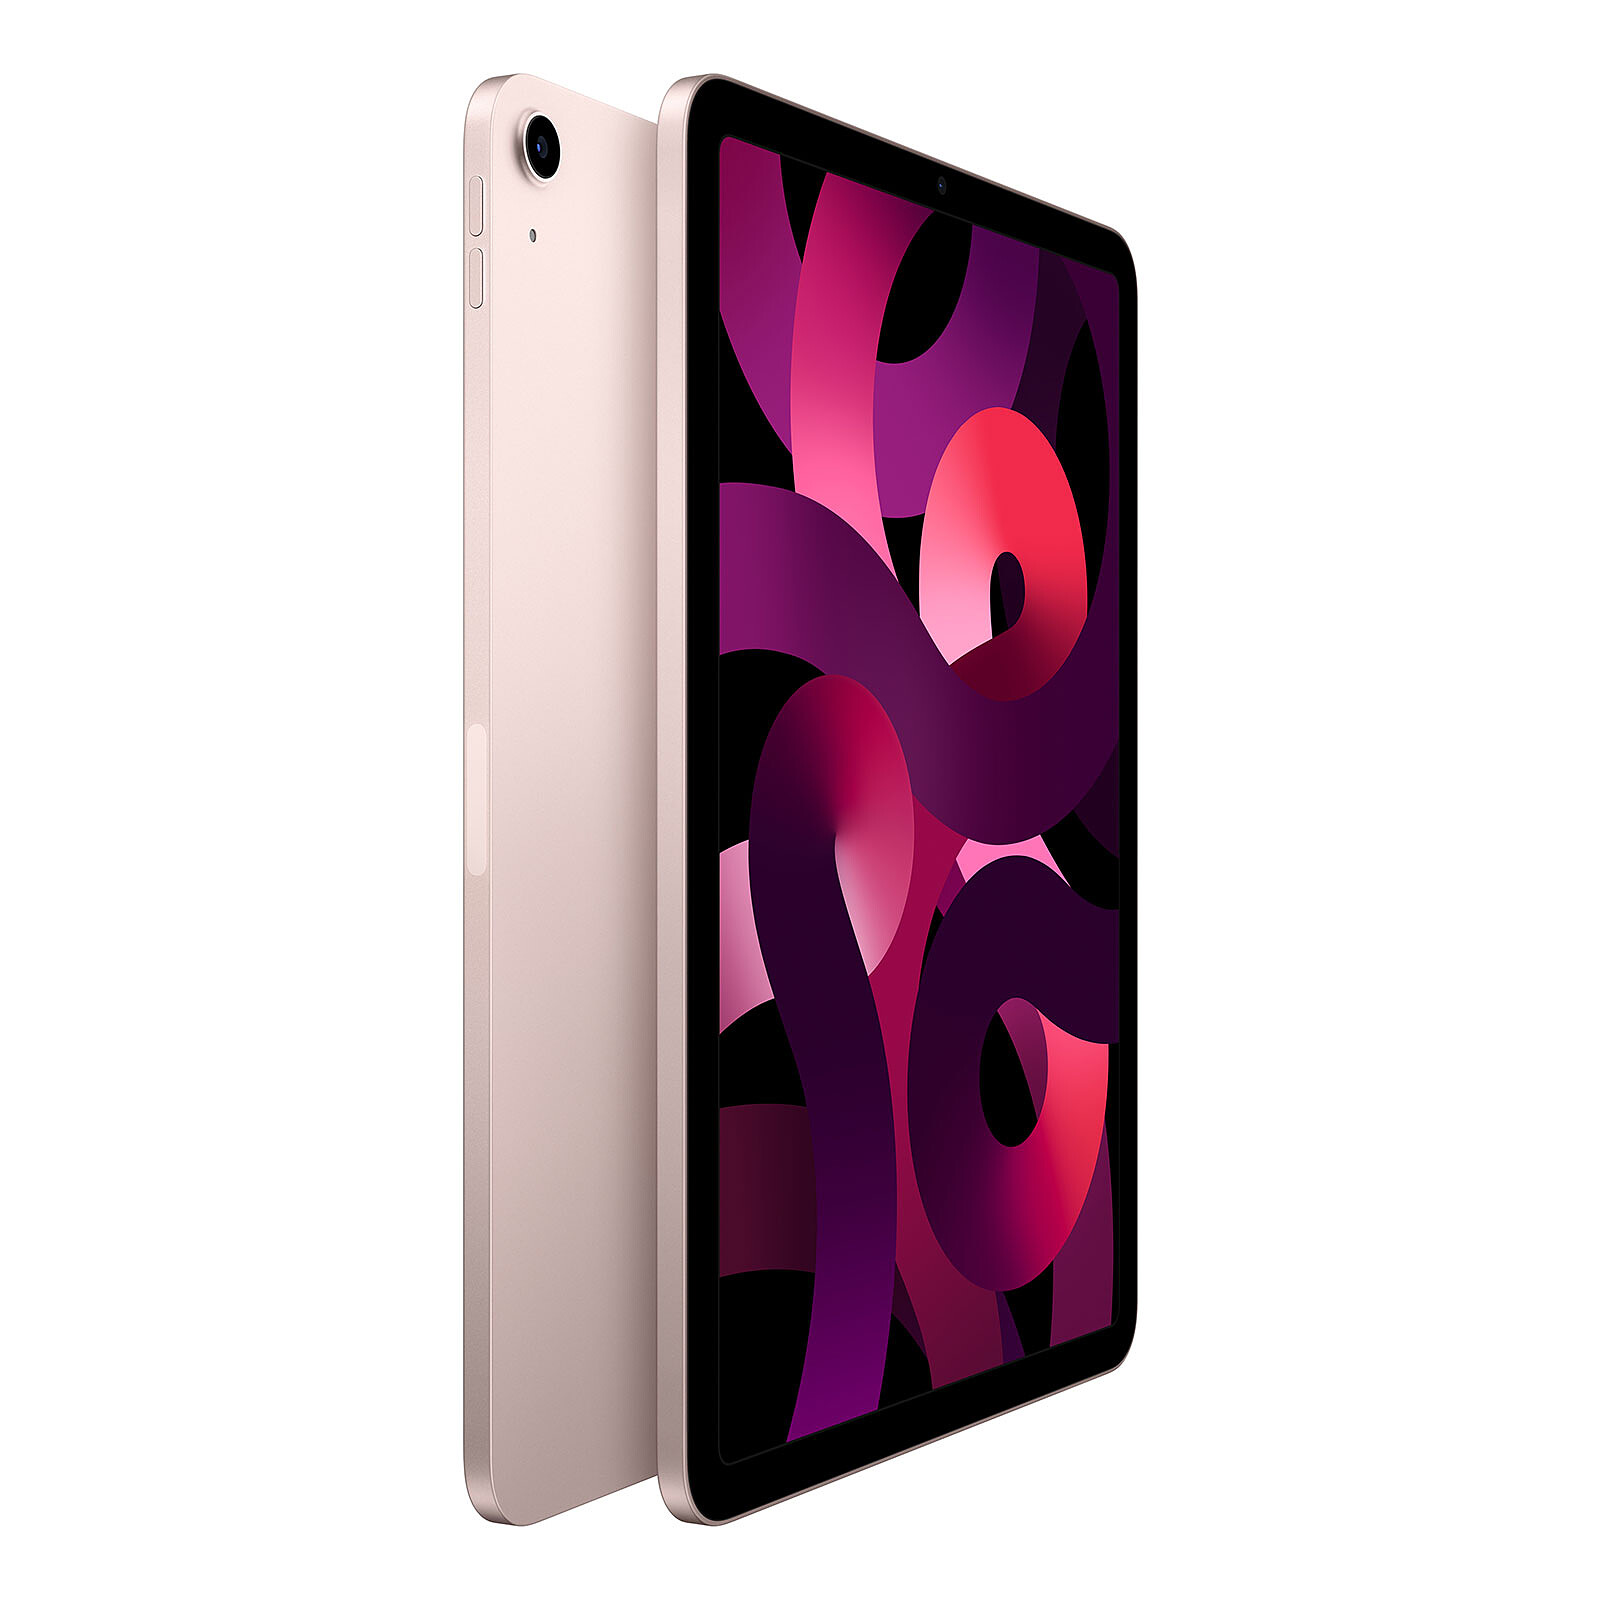 Apple iPad (2022) 64 Go Wi-Fi Rose - Tablette tactile - Garantie 3 ans LDLC